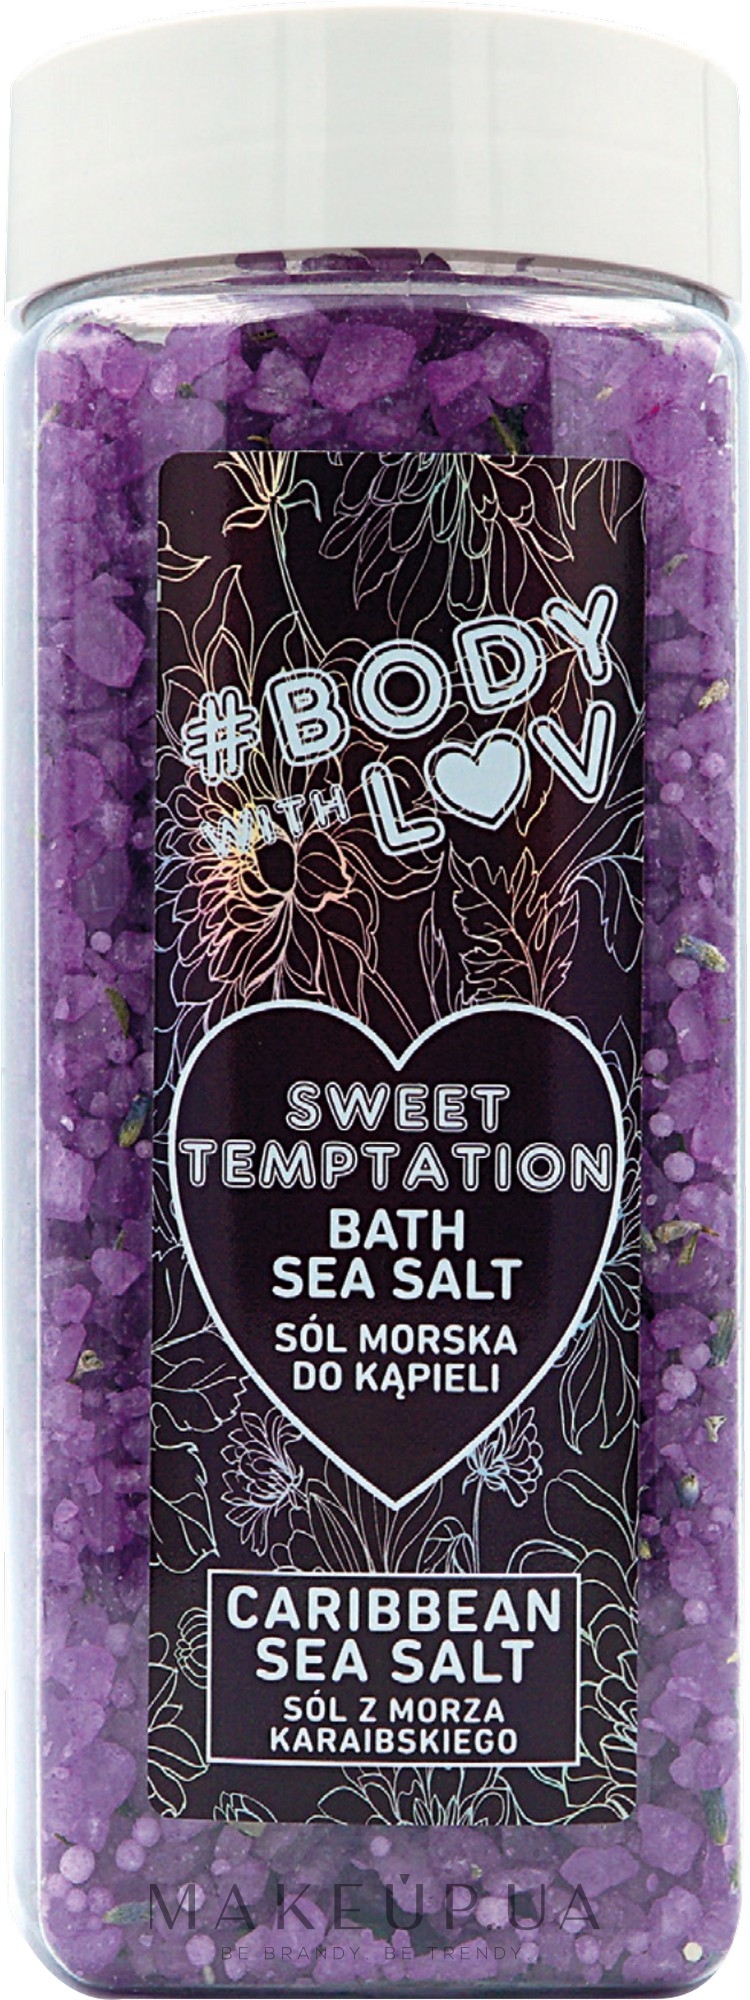 Сіль для ванн "Солодка спокуса" - New Anna Cosmetics Body With Luv Sea Salt For Bath Sweet Temptation — фото 500g